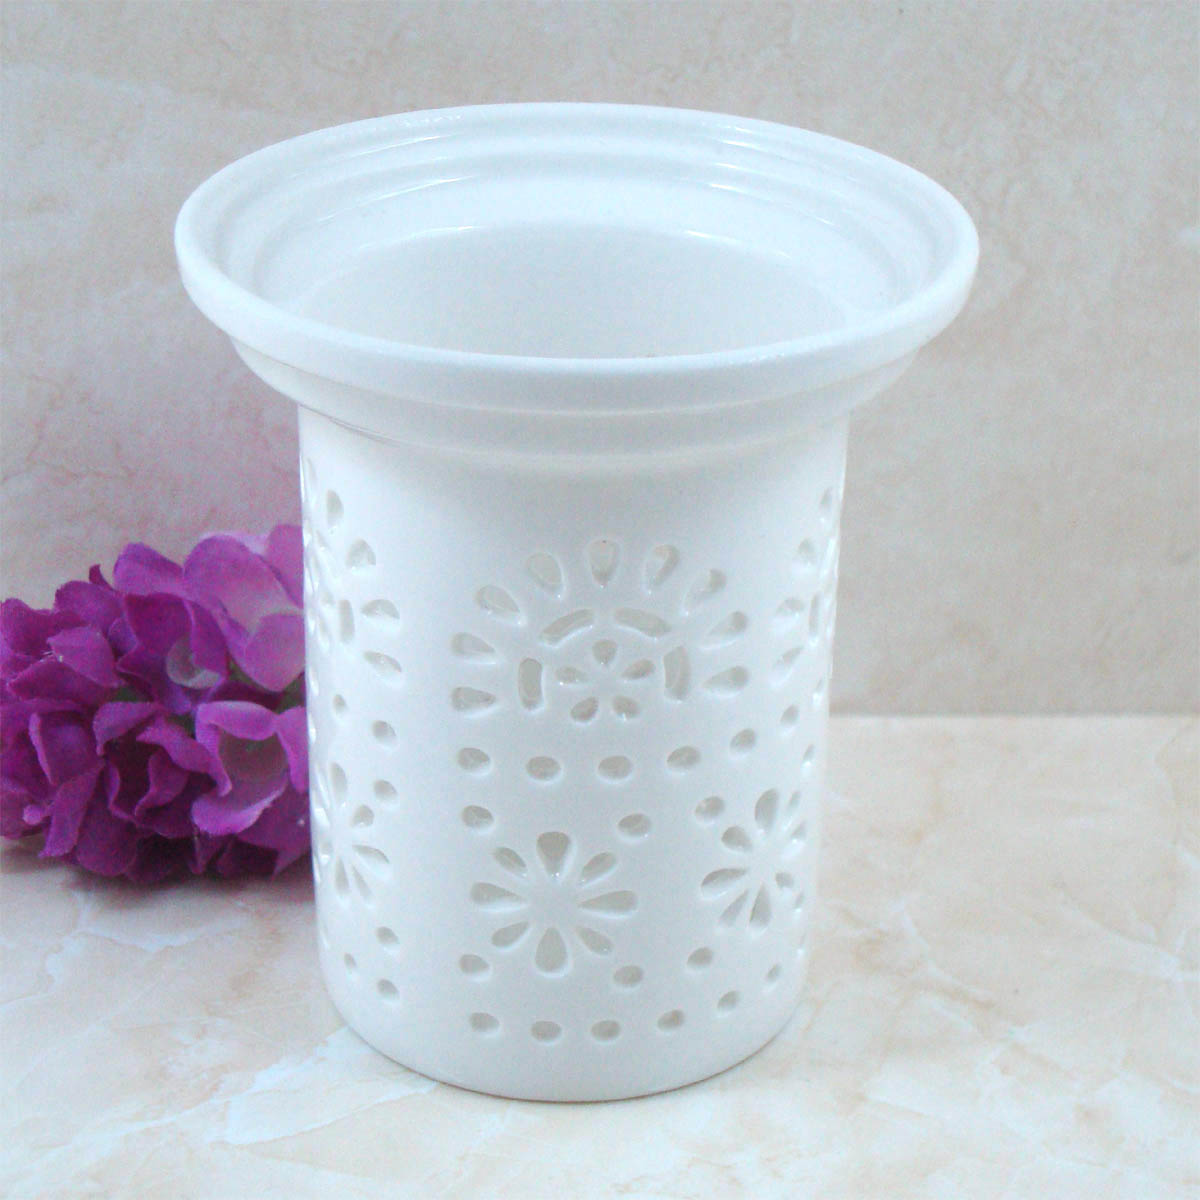 Ceramic teapot filter) tea strainer every tea net kung fu tea accessories carving flower tea filter mercifully.net